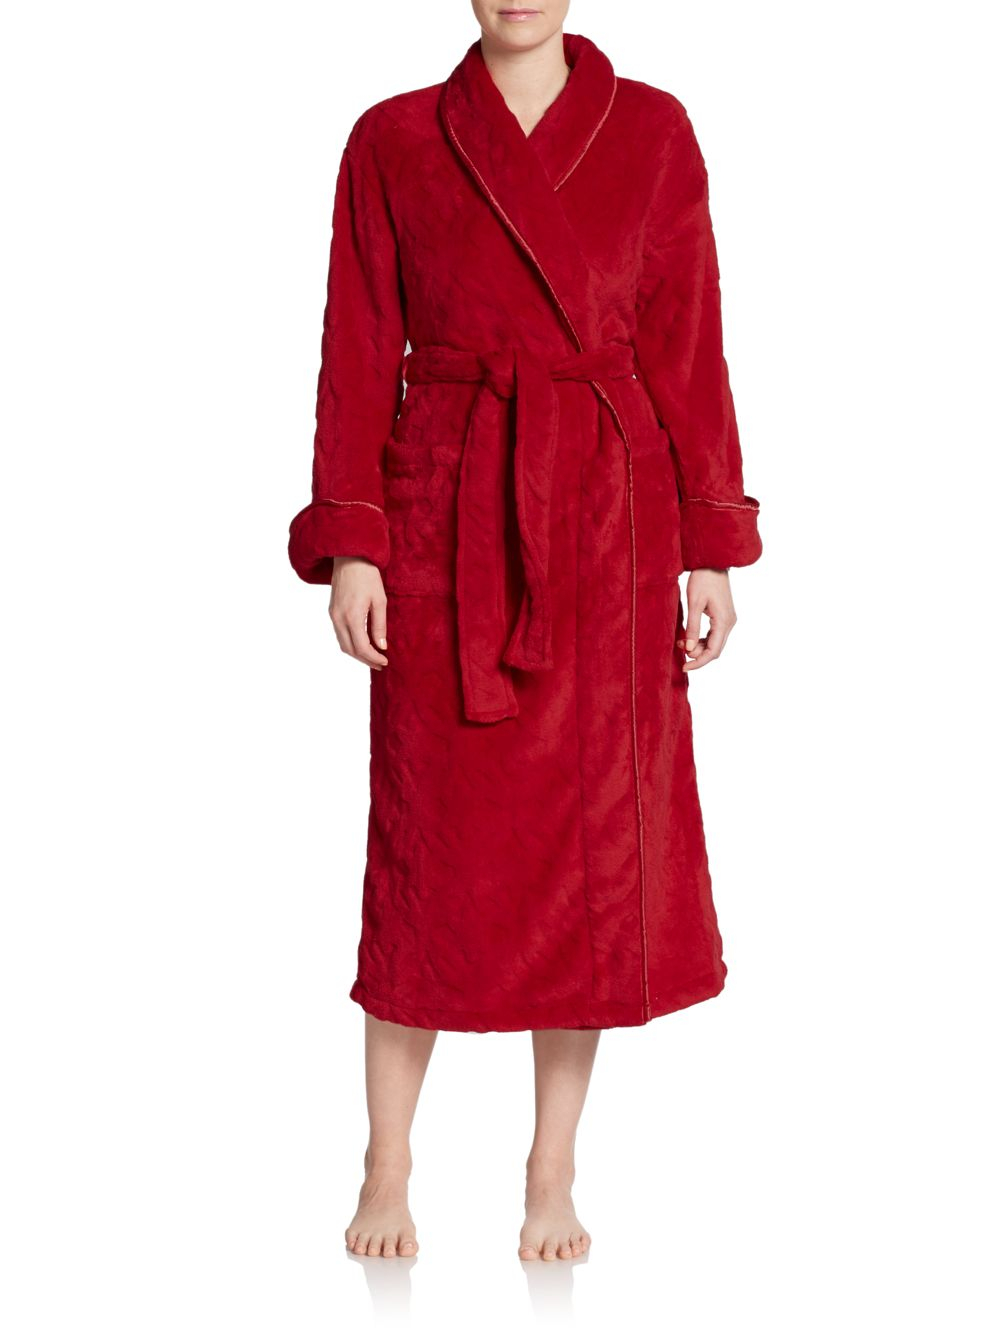 Lyst - Natori Satin-trimmed Fleece Robe in Red